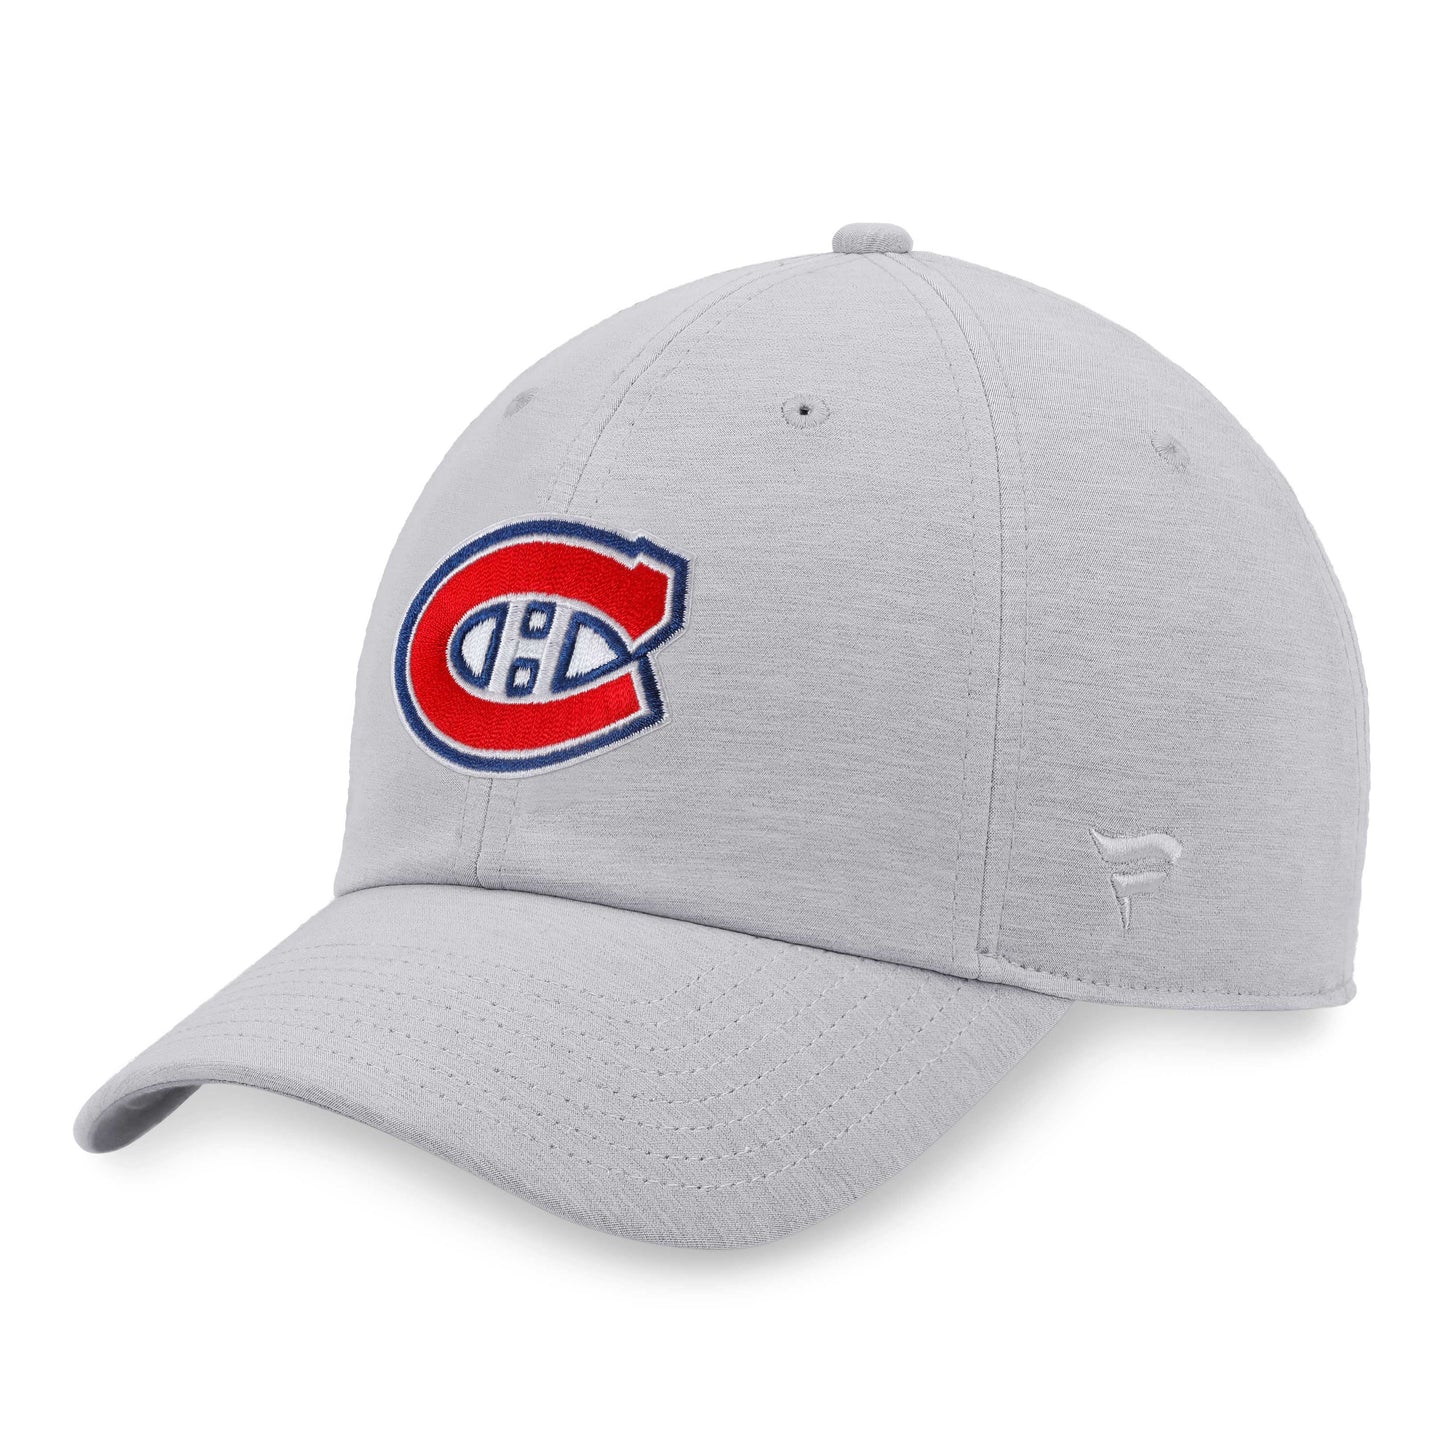 Men's Fanatics Branded Heather Gray Montreal Canadiens Logo Adjustable Hat - OSFA